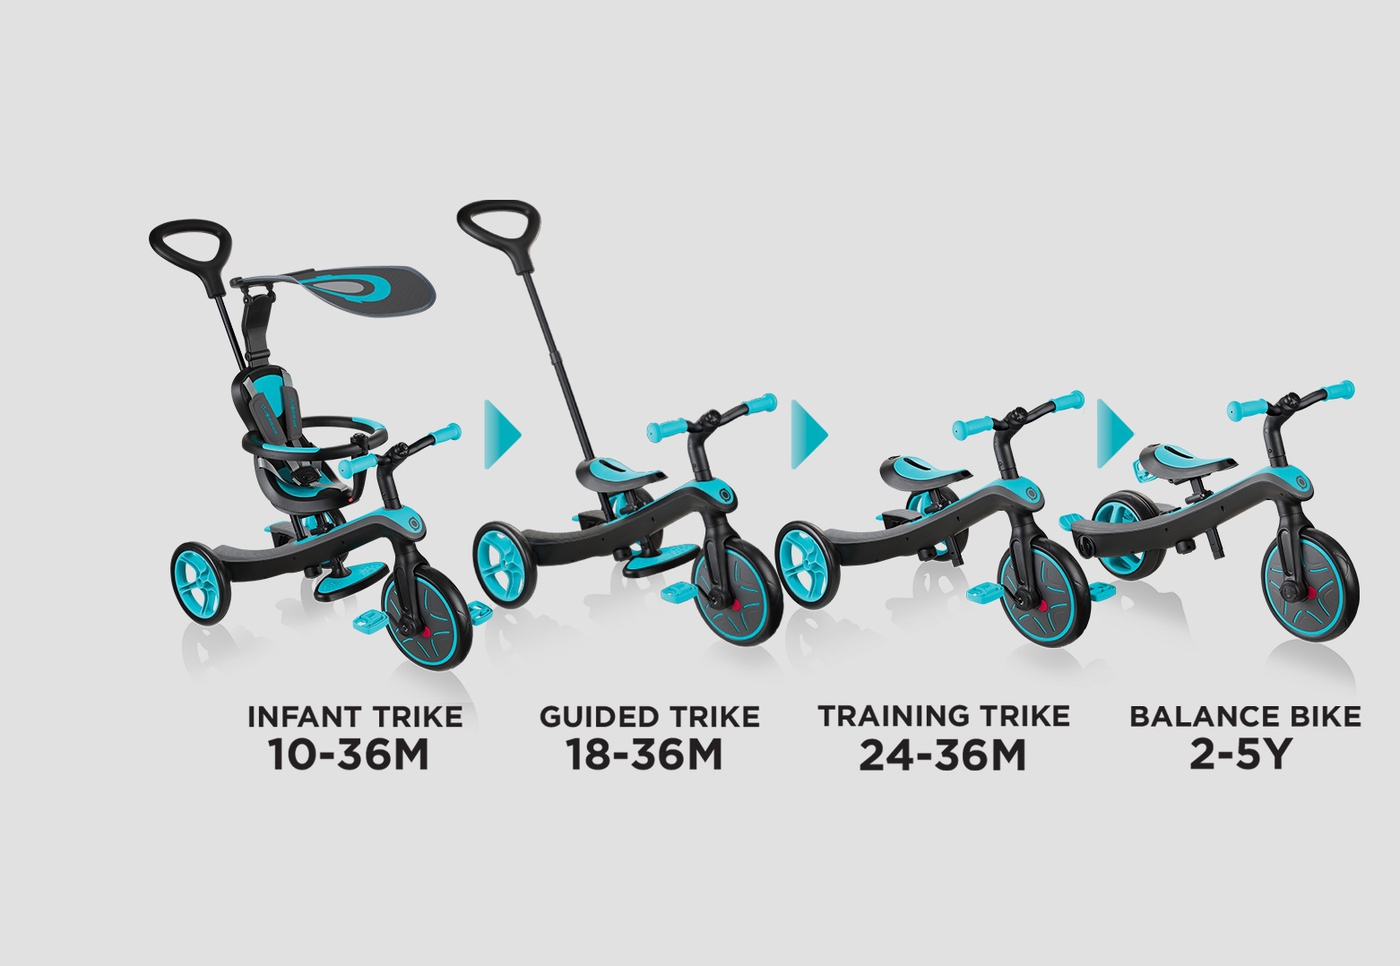 Baby Boys & Girls Tricycle that Transforms into a Kids Balance Bike ... - KSP1 EXPLORER TRIKE 4in1 Baby Tricycle Infant Trike GuiDeD Trike Training Bike Balance Bike 1591090819 14